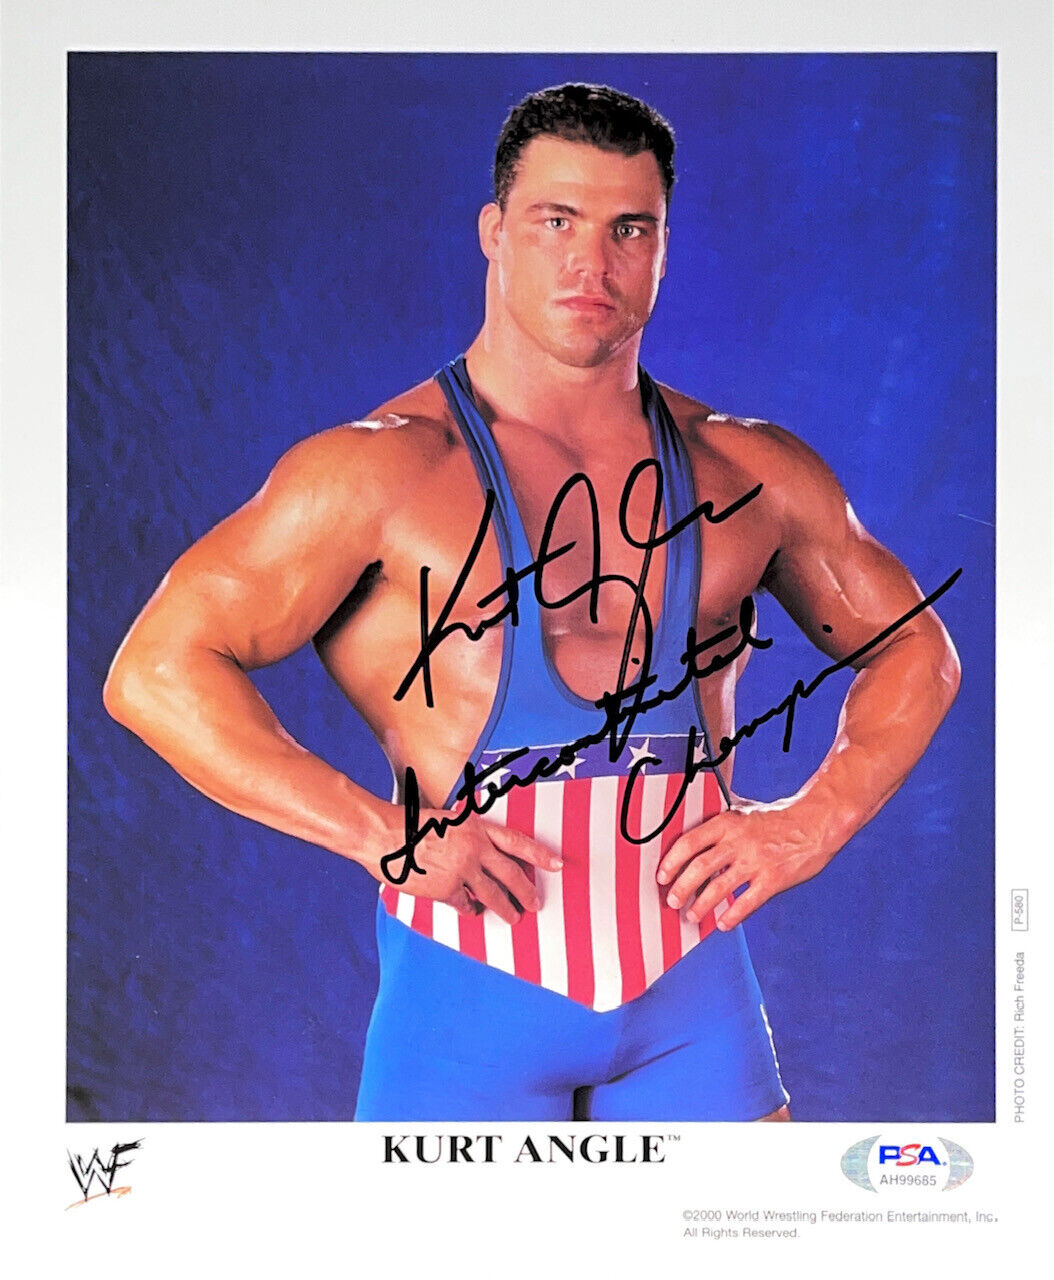 WWE KURT ANGLE P-580 HAND SIGNED AUTOGRAPHED 8X10 PROMO Photo Poster painting WITH PSA COA 2